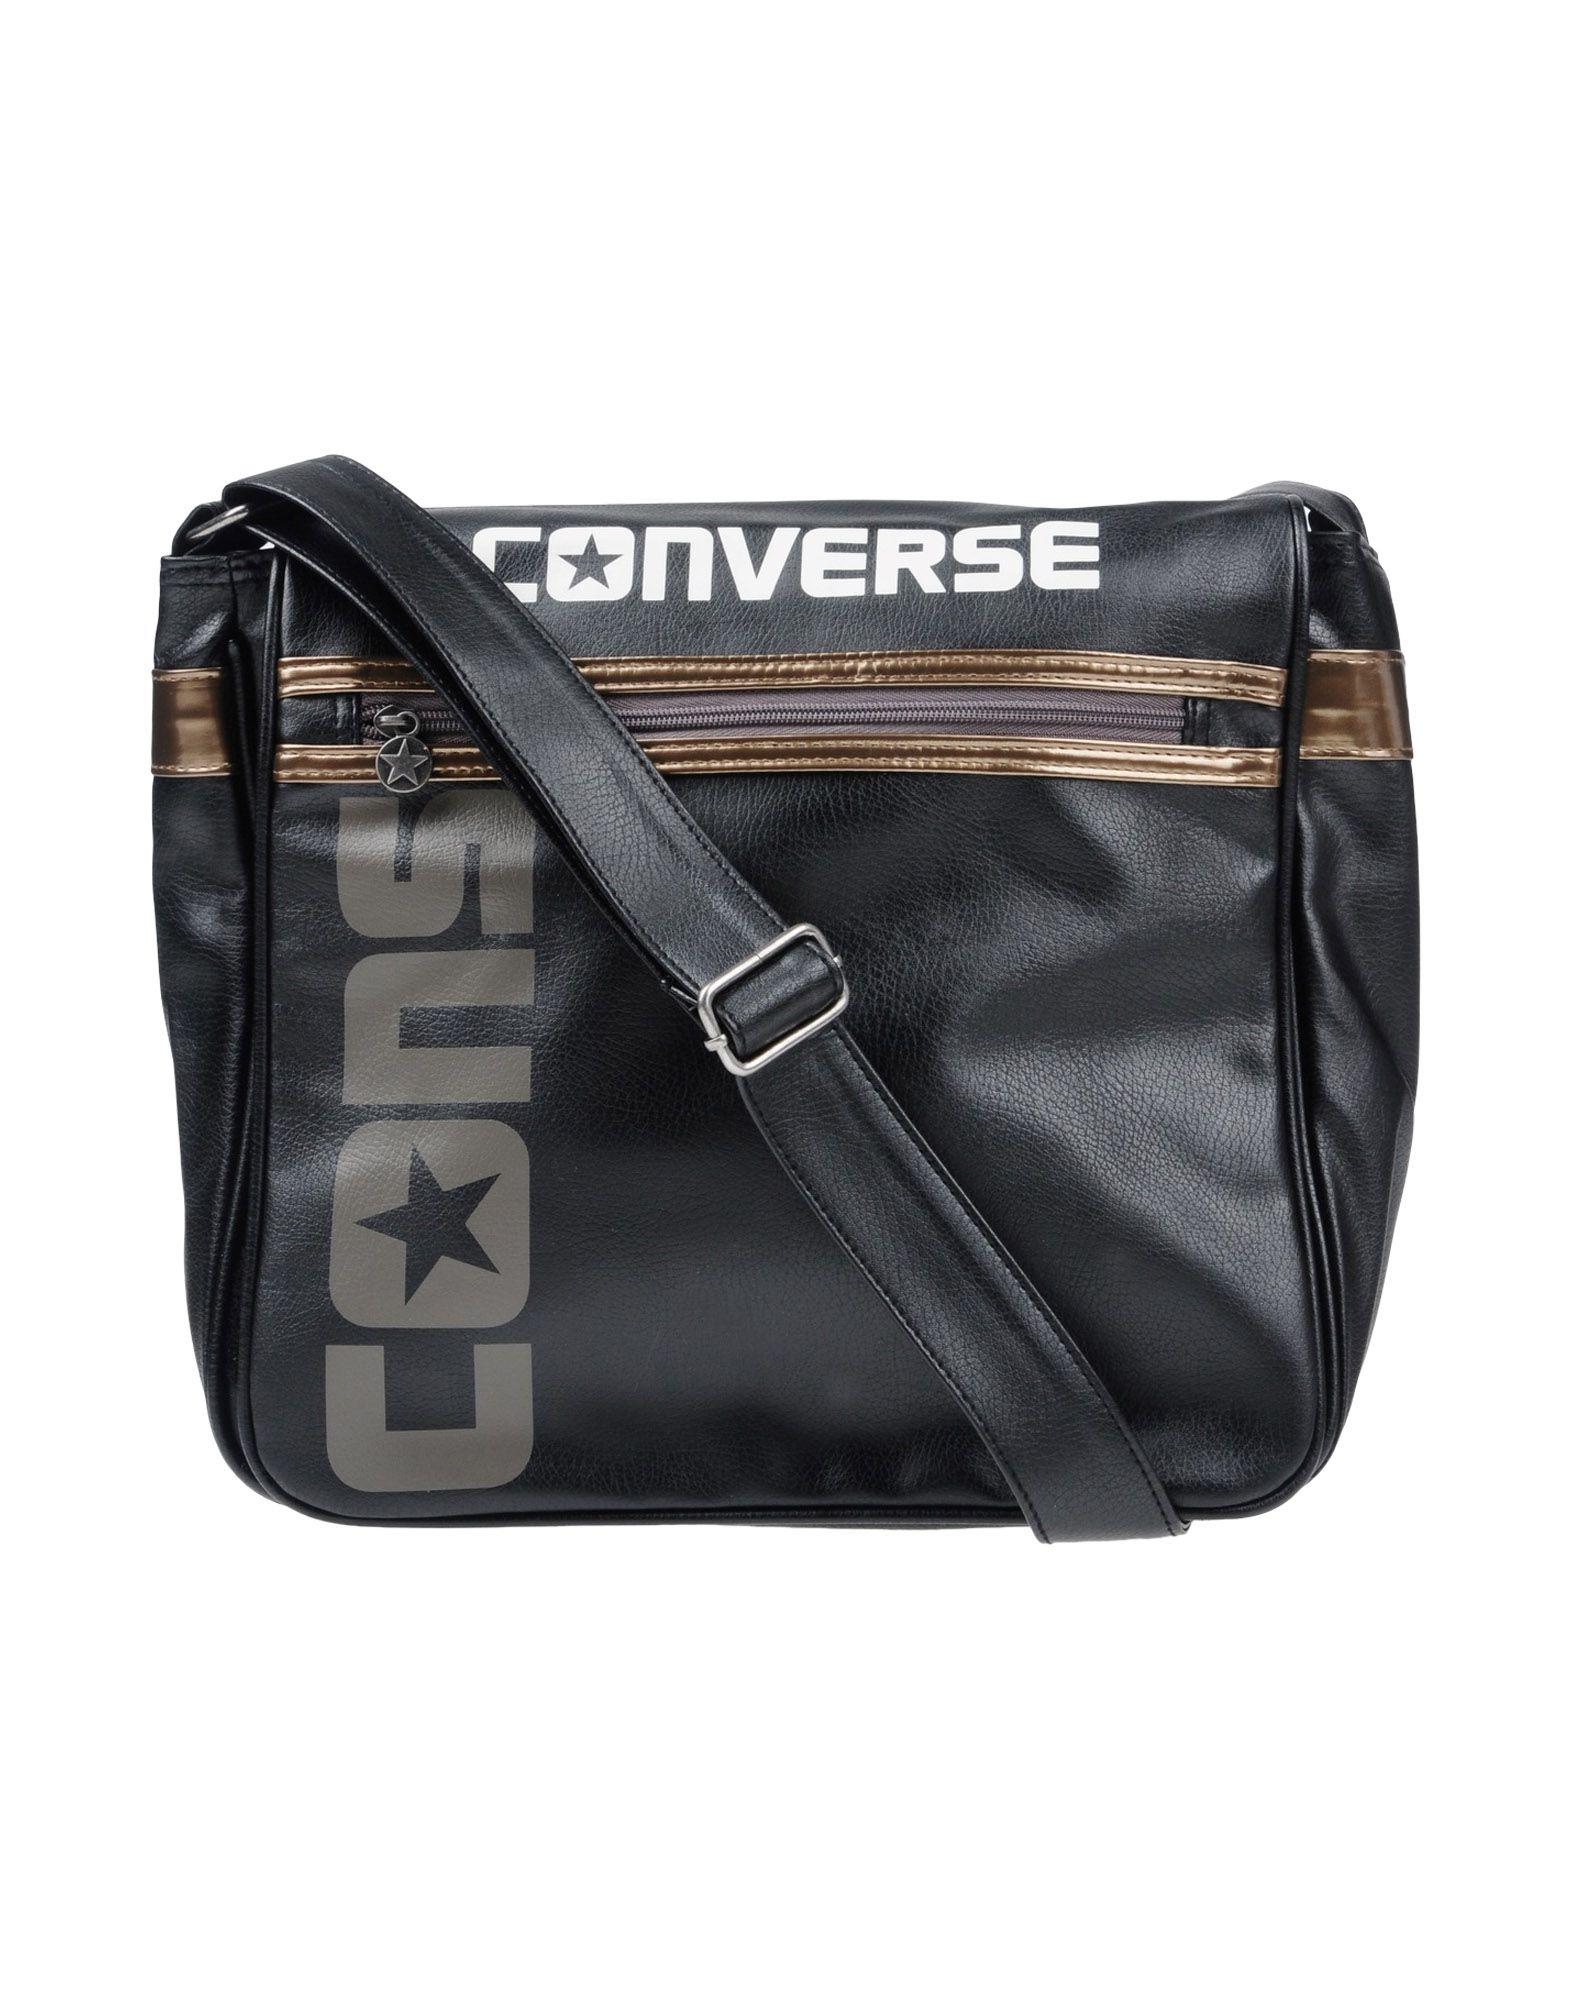 converse cross bag